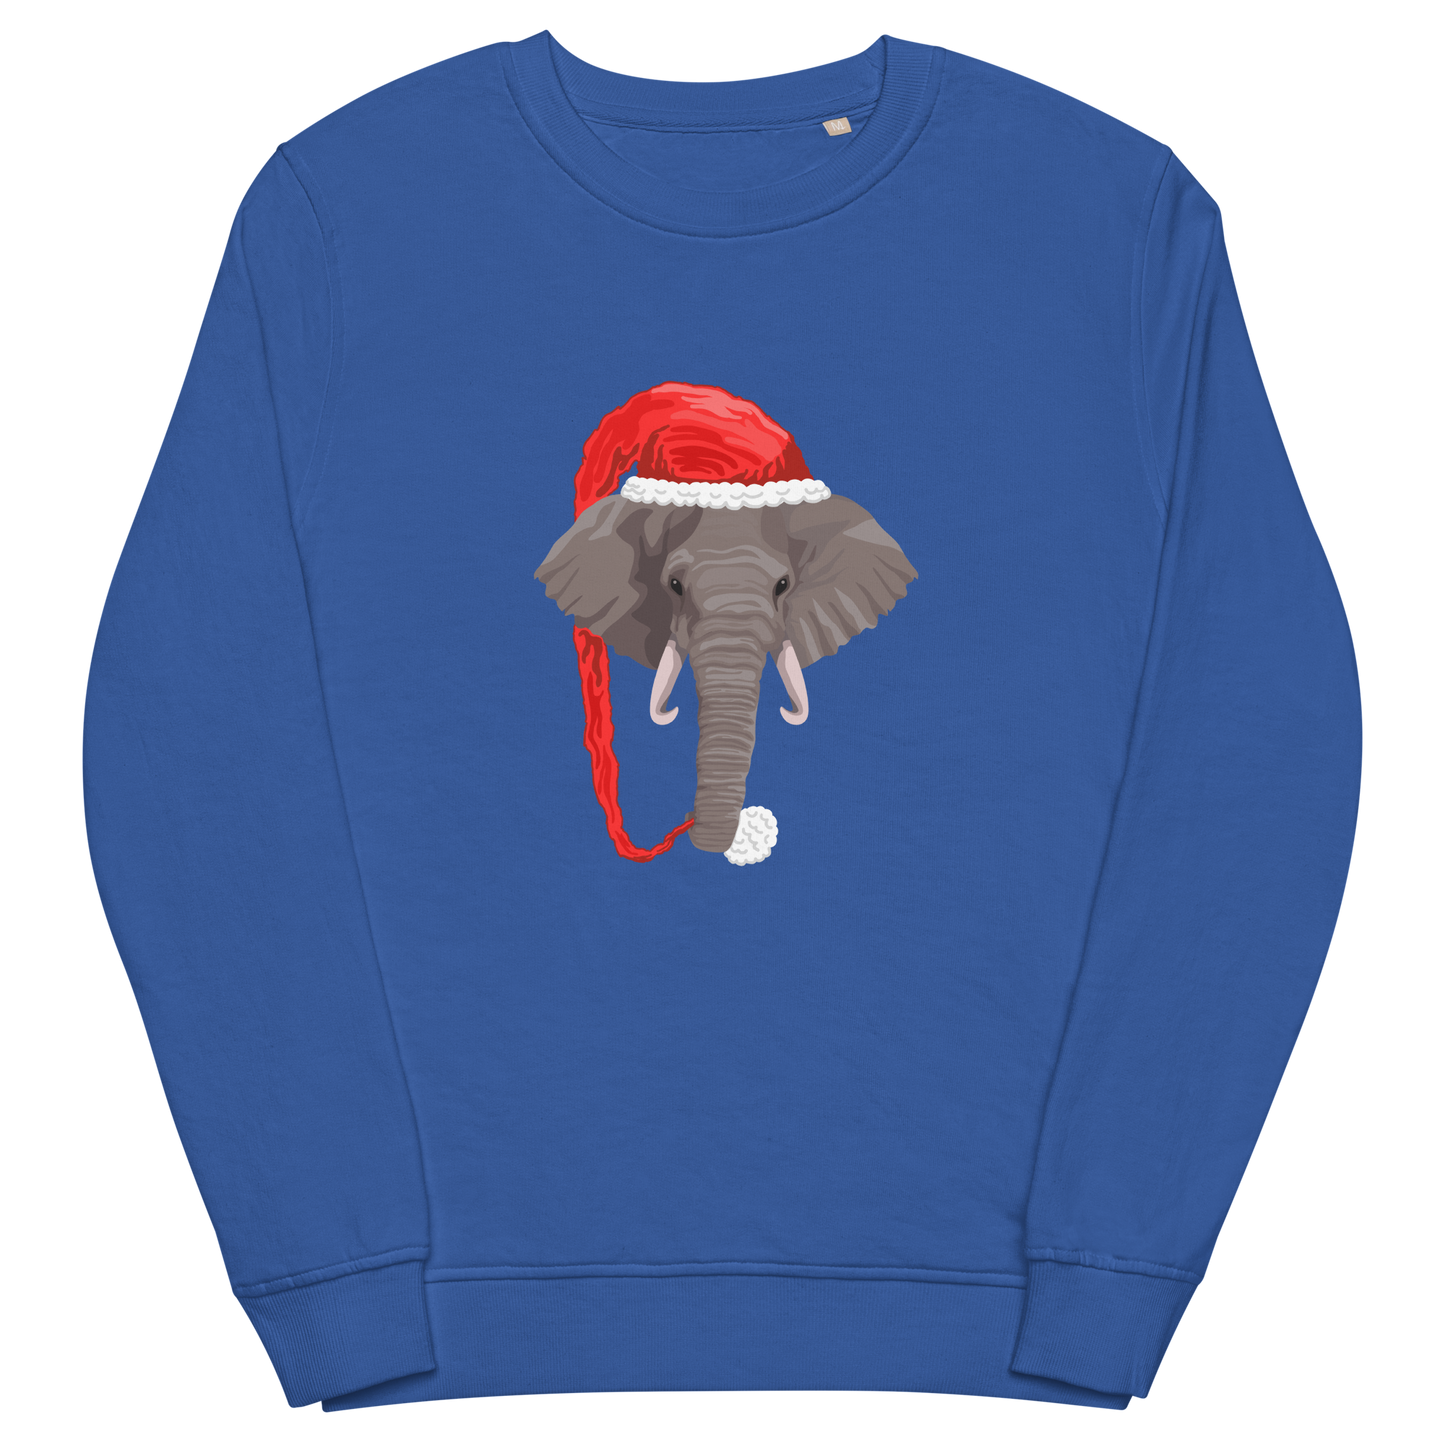 Royal Blue Organic Christmas Elephant Sweatshirt featuring a delight Elephant Wearing an Elf Hat graphic on the chest - Funny Christmas Graphic Elephant Sweatshirts - Boozy Fox